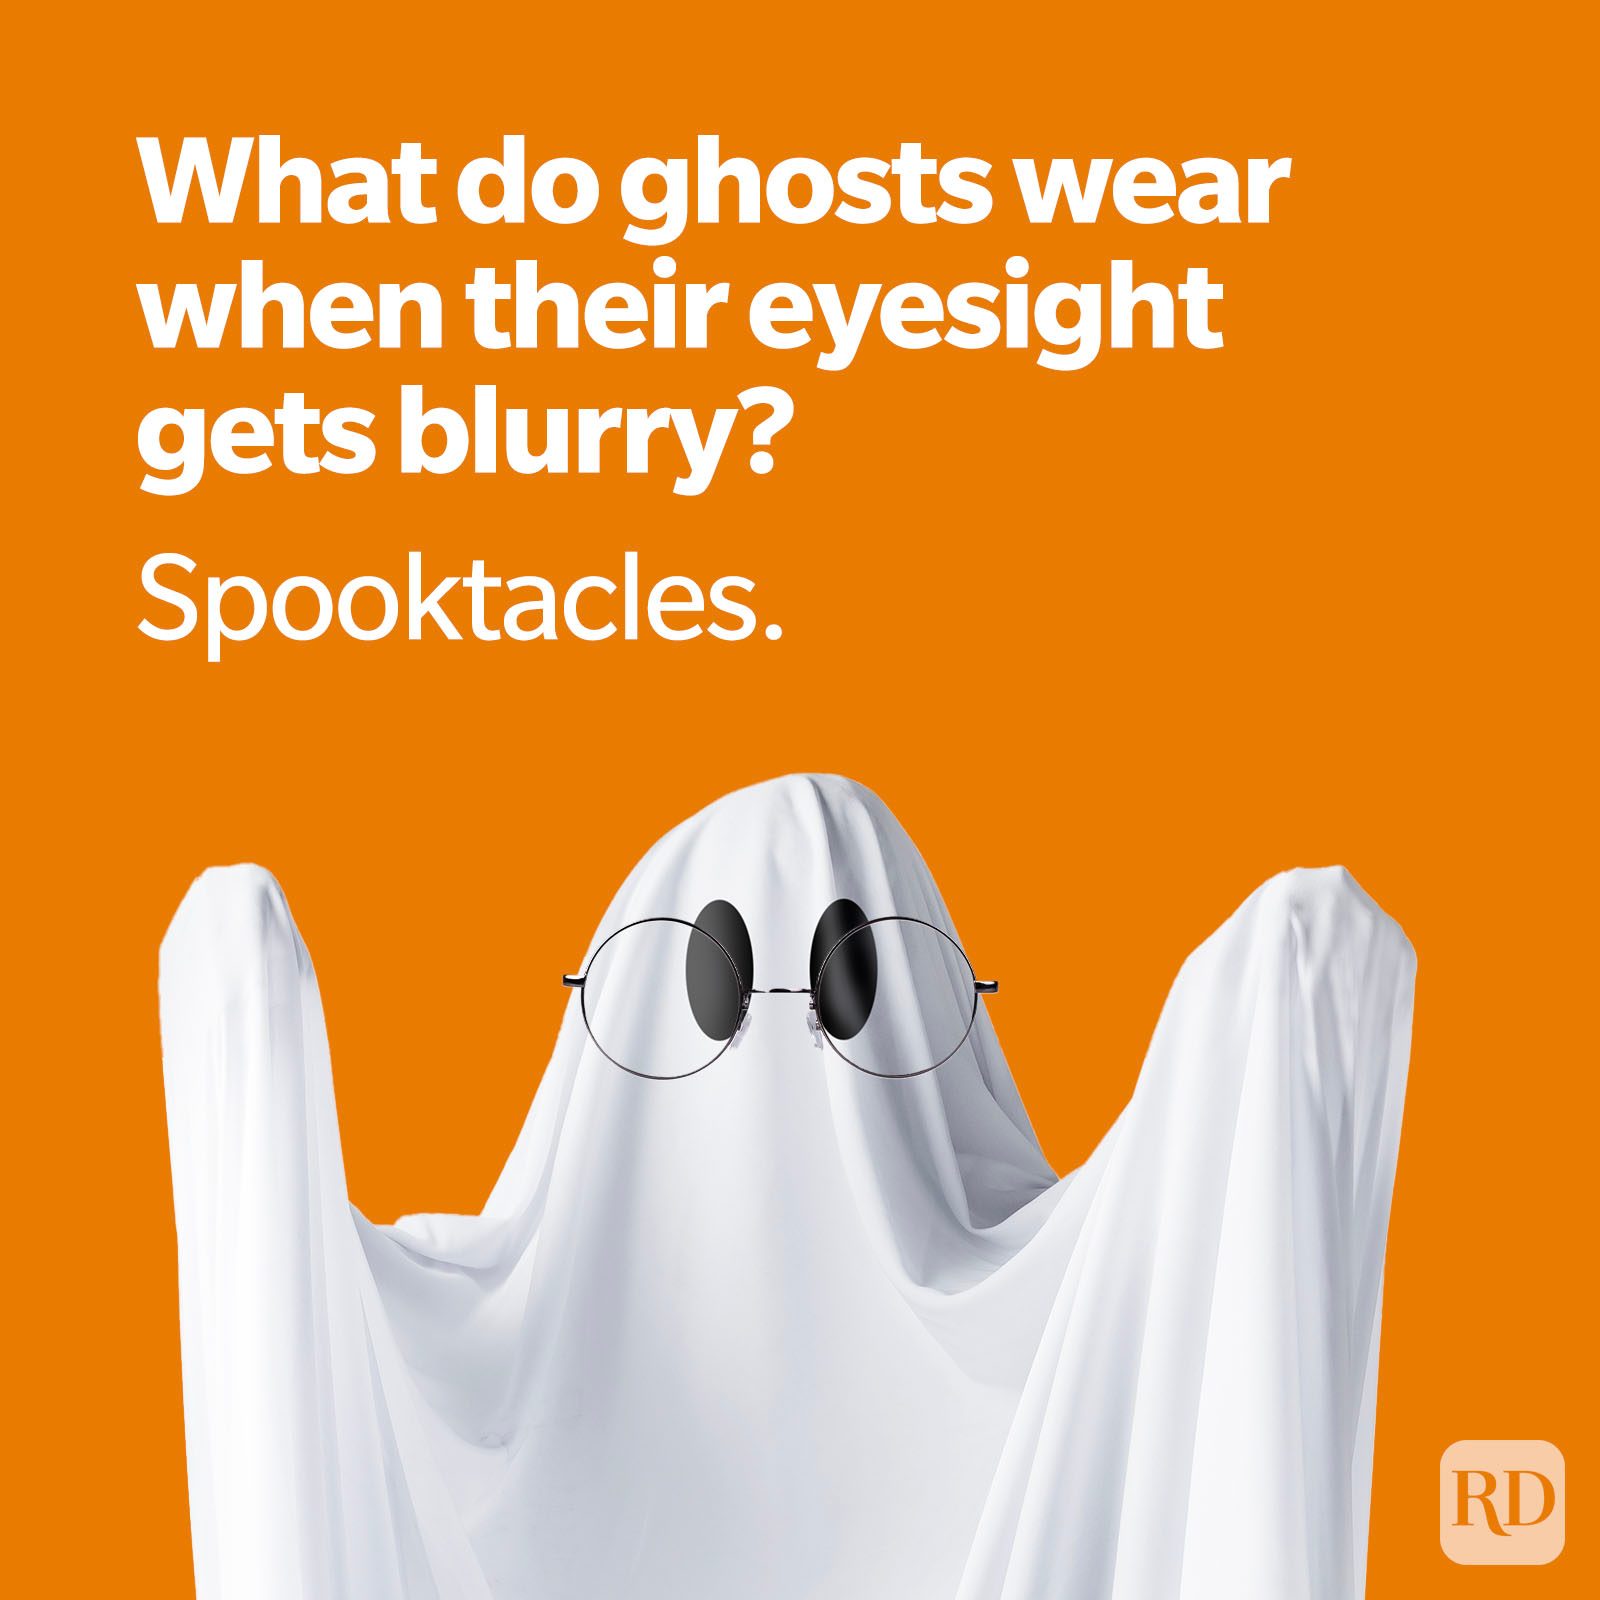 scary ghost in picture joke